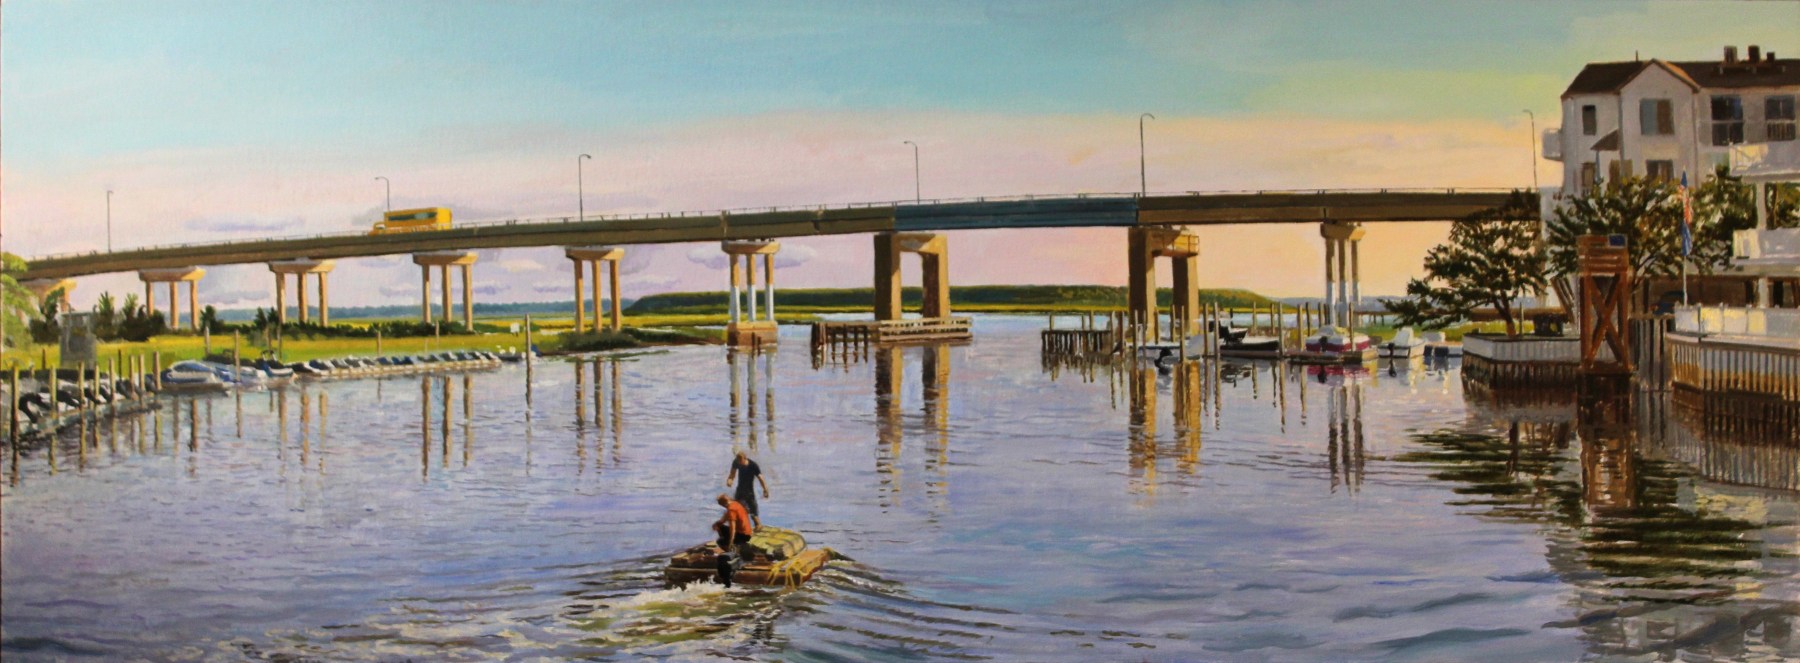 Dock Builders  20&quot; x 54&quot;  Oil On Canvas